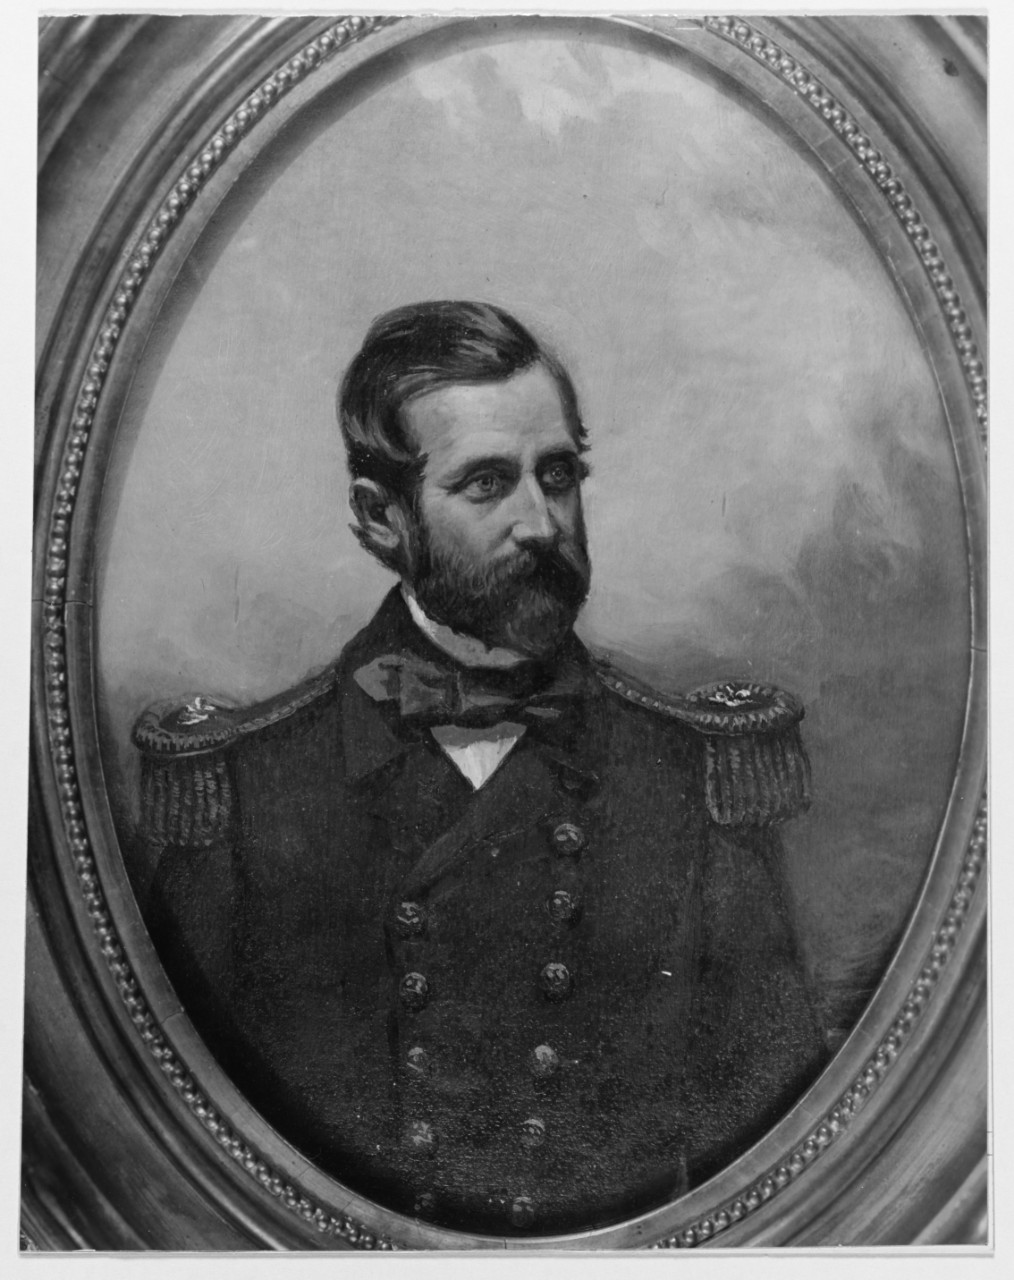 Commander William May, USN